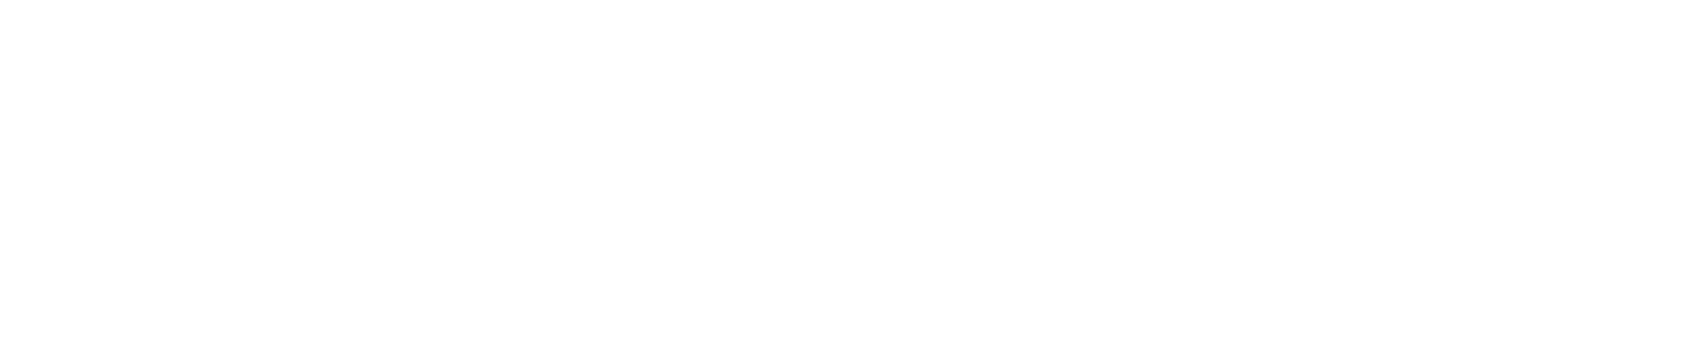 oddworld soulstorm logo